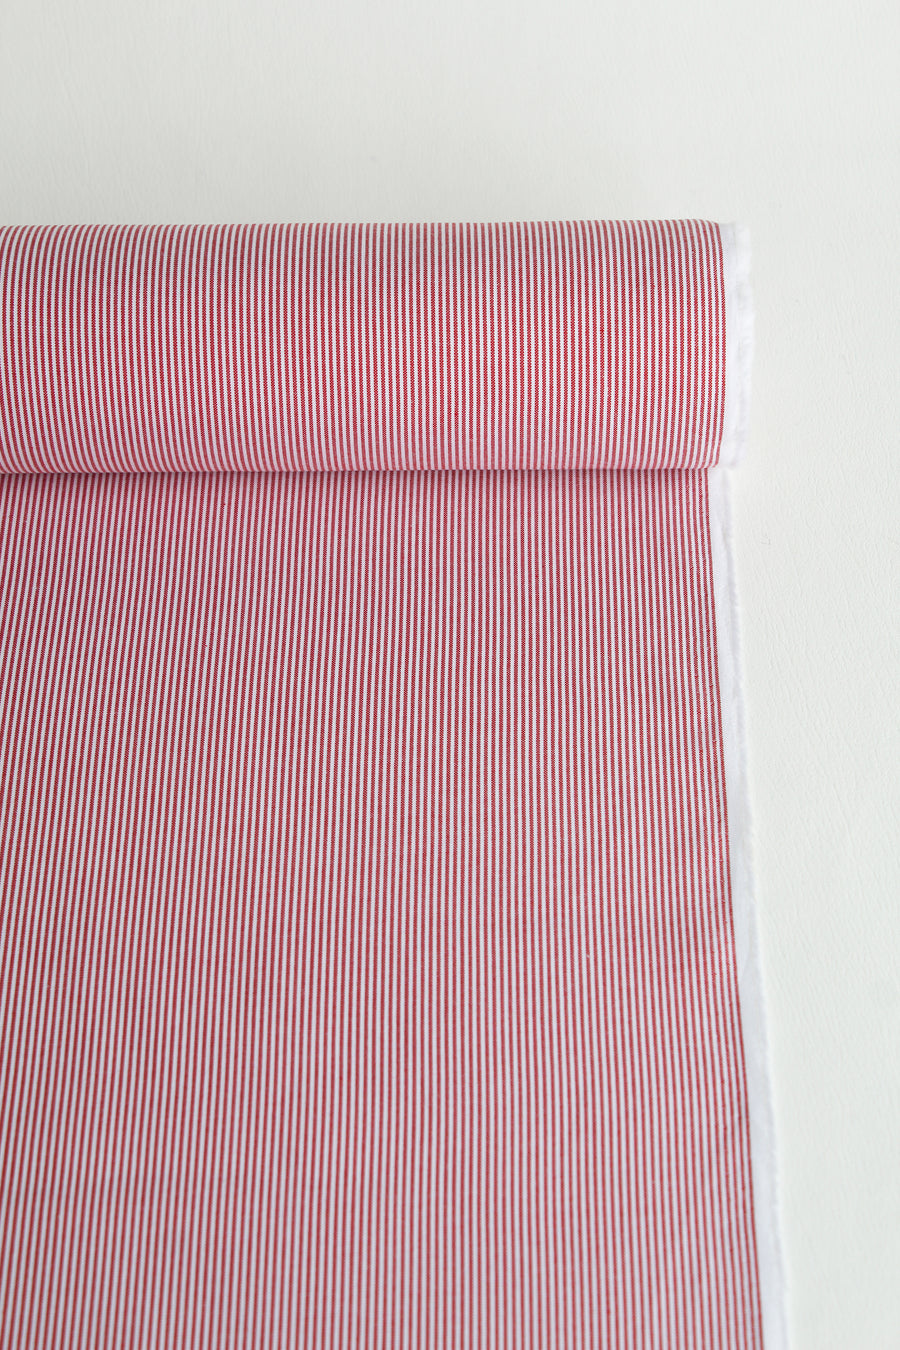 Tosca - Yarn Dyed Cotton Stripe | Brick